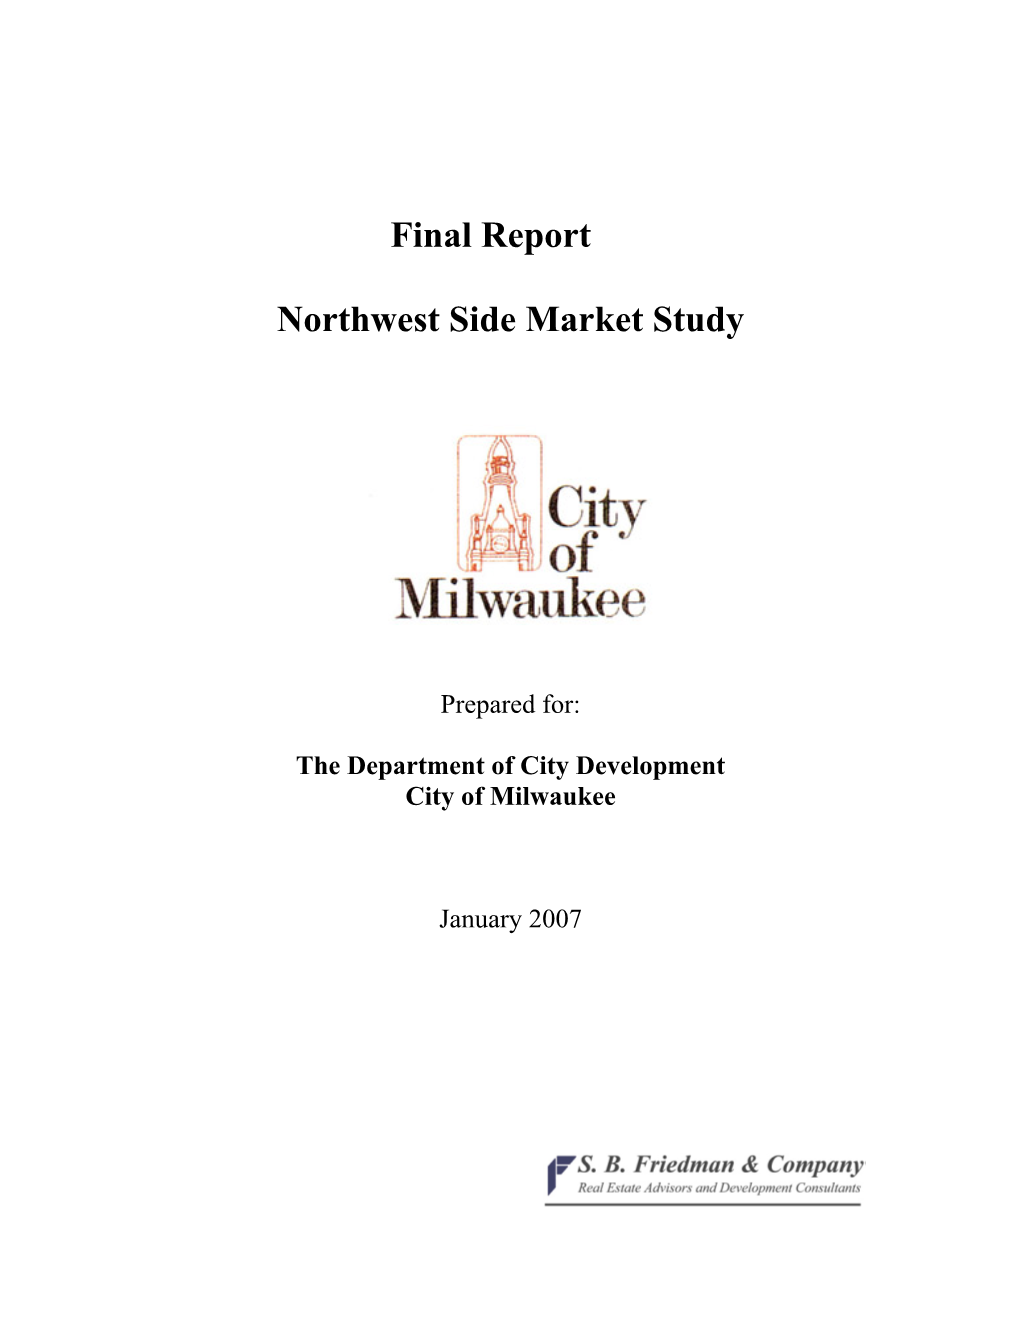 Final Report Northwest Side Market Study